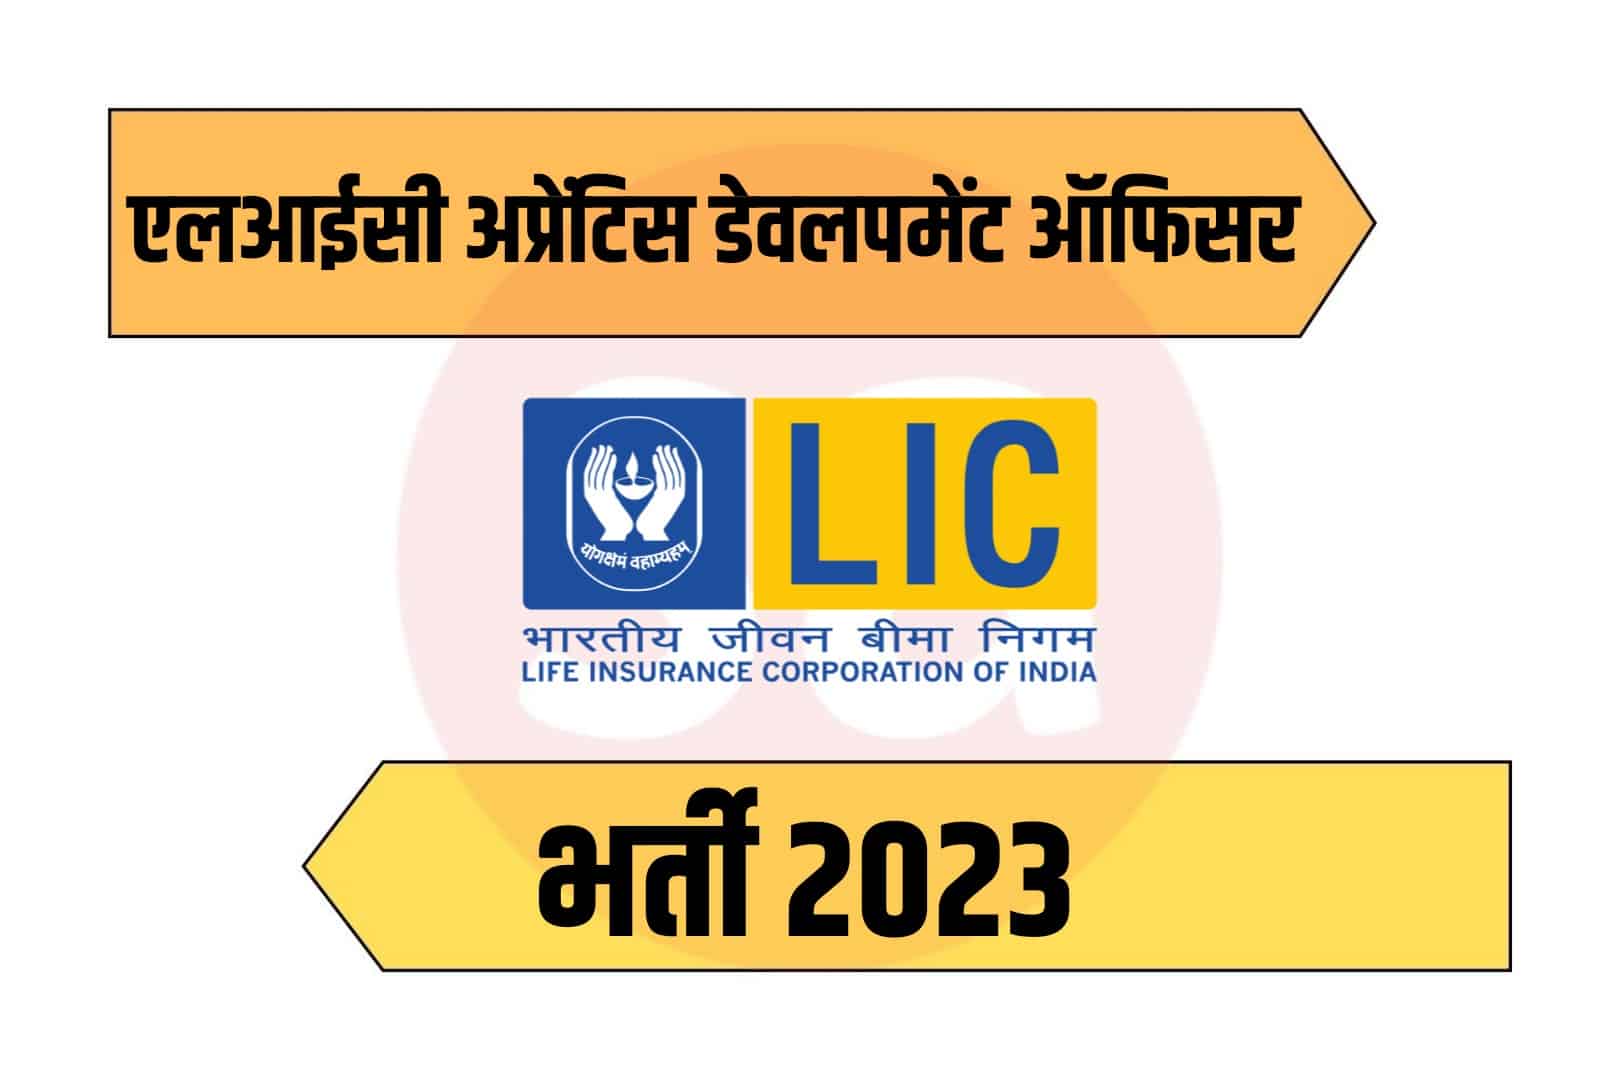 LIC Apprentice Development Officer Recruitment 2023 Online Form | एलआईसी अप्रेंटिस डेवलपमेंट ऑफिसर भर्ती 2023